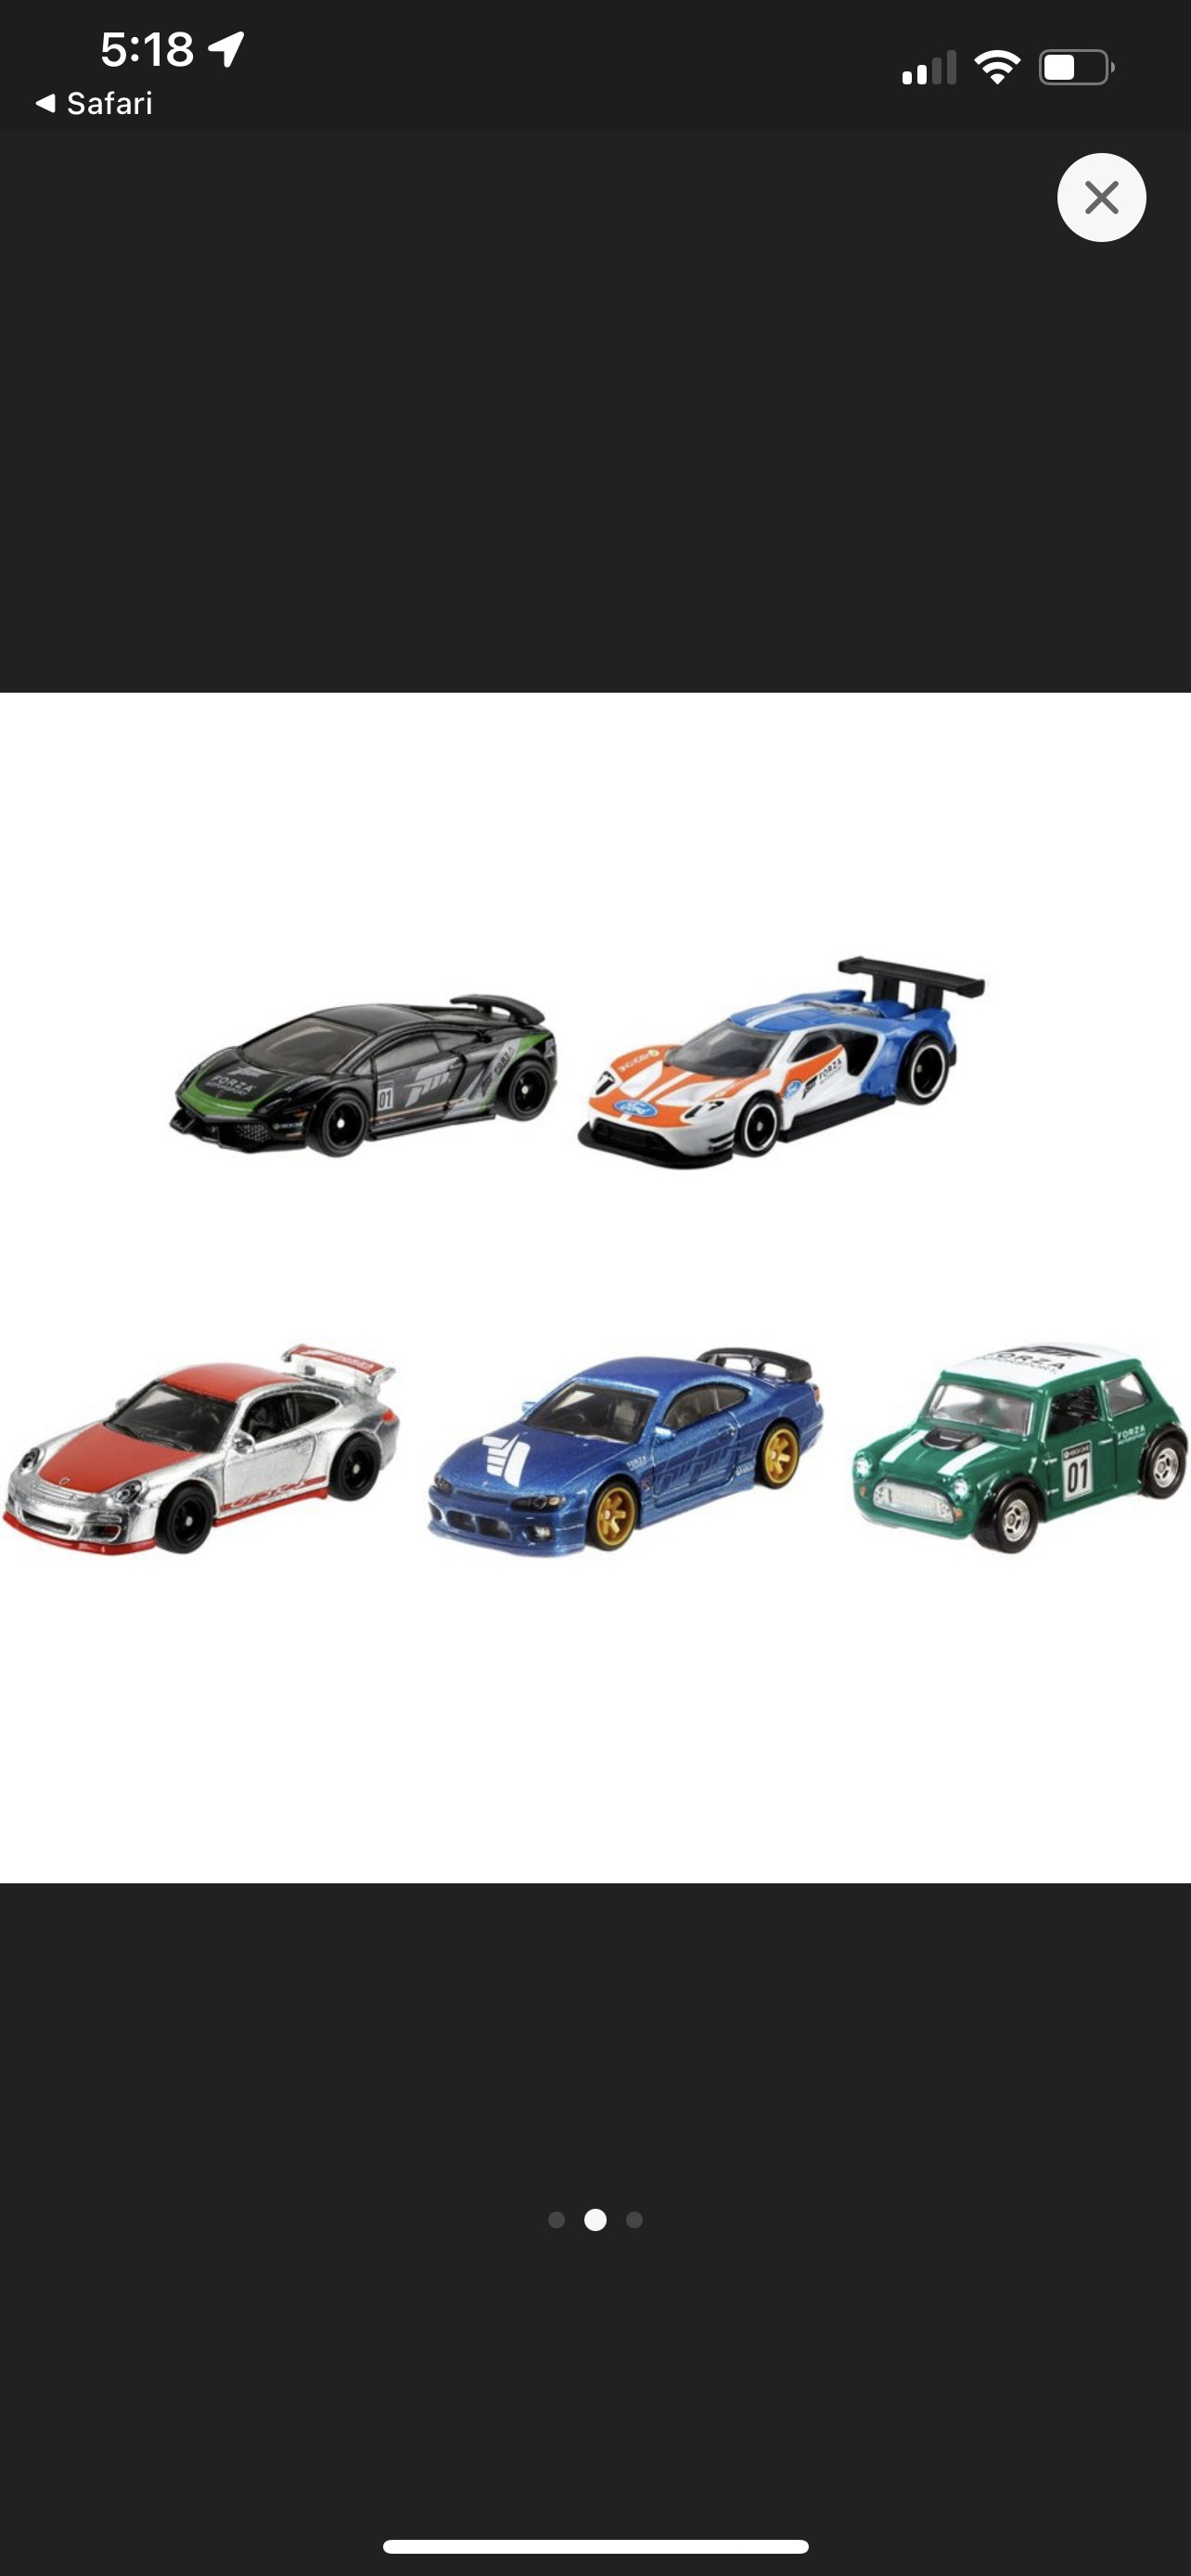 Hot Wheels - Forza Motorsport - 5 Car Premium Set by Mattel. - Now and Then  Galleria LLC